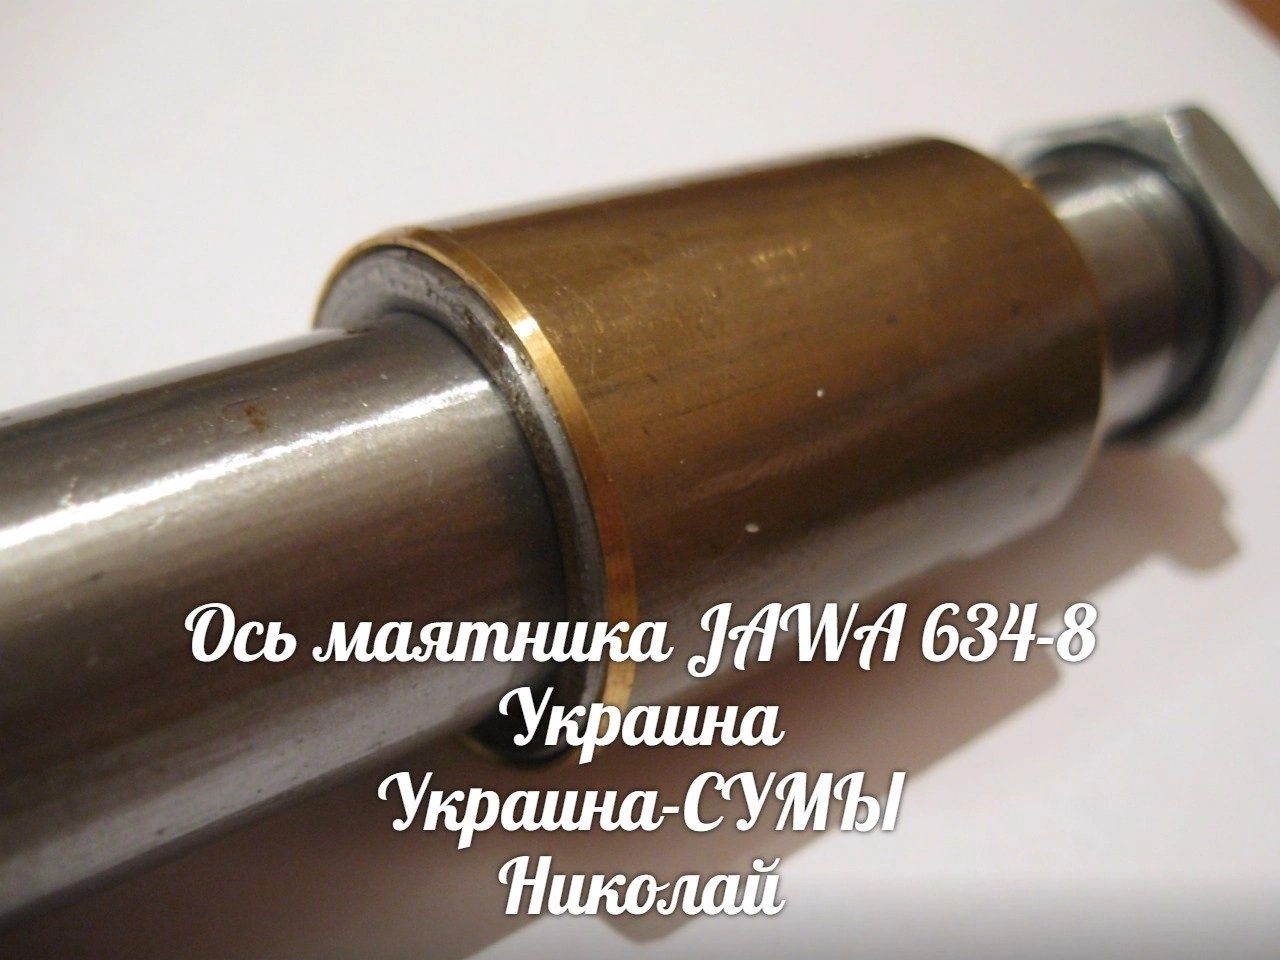 Ремонтная ось маятника ЯВА/JAWA 634-638.